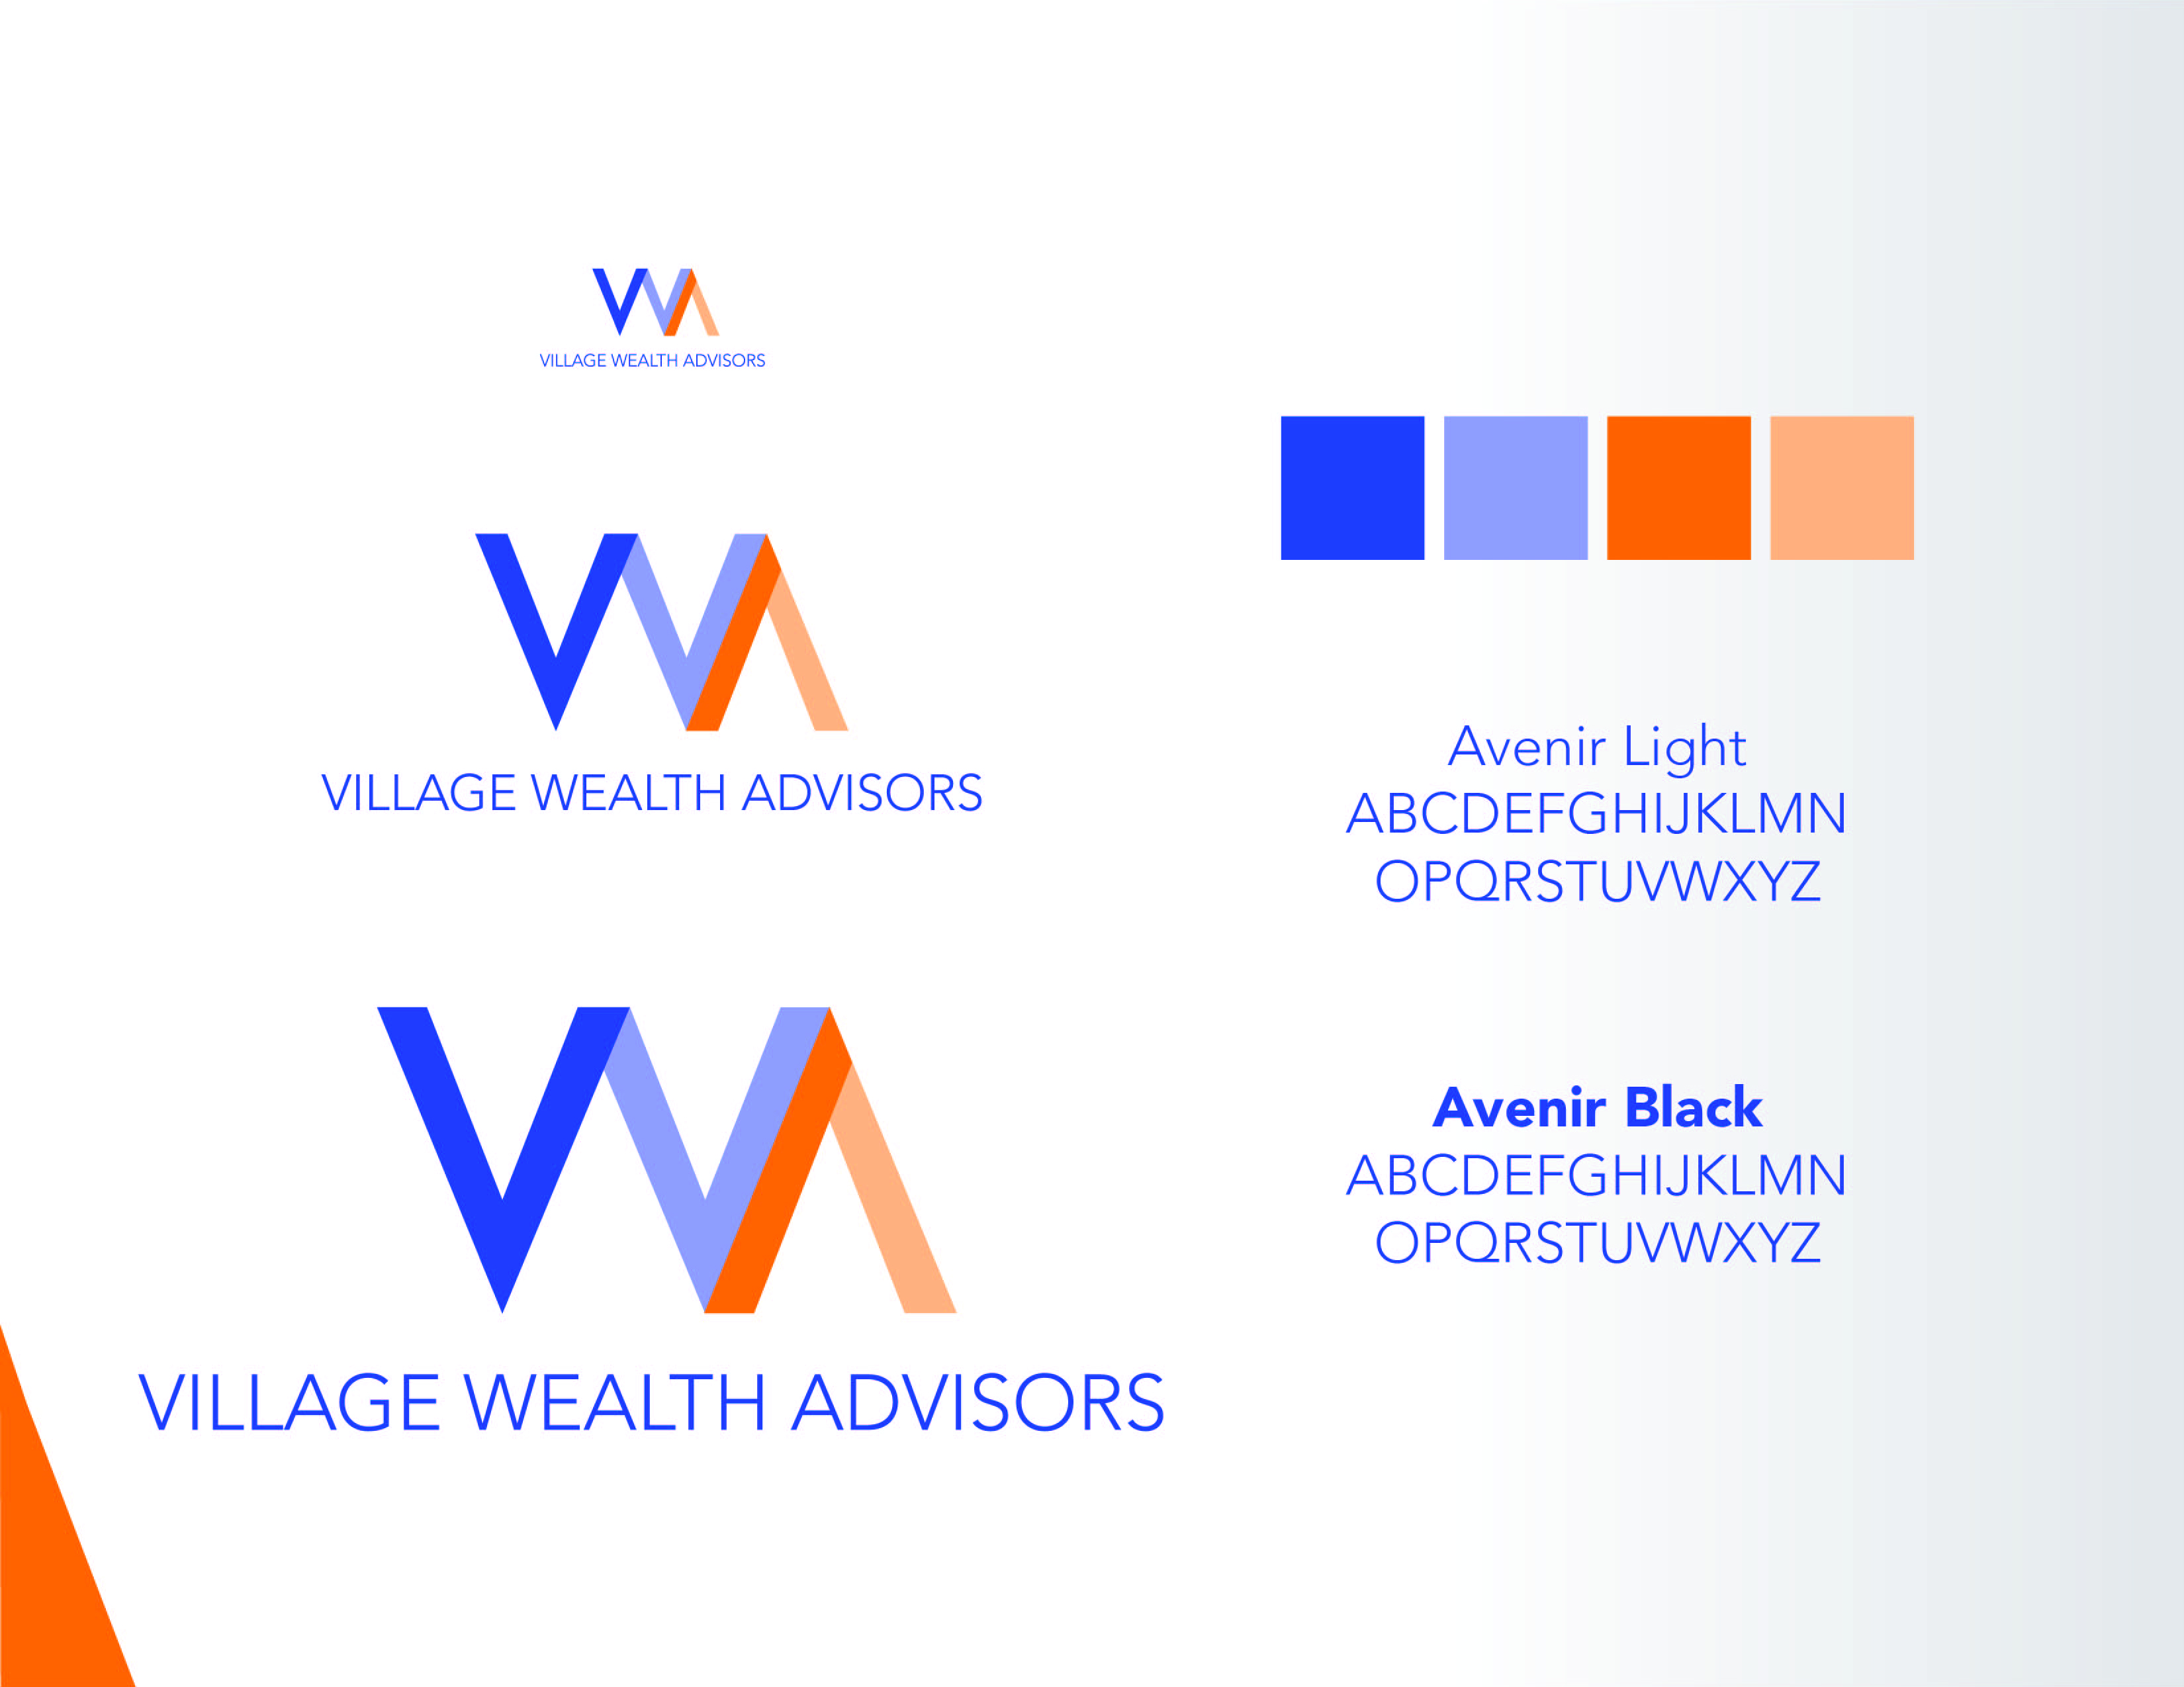 https://newmangrace.com/project/village-wealth-advisors/